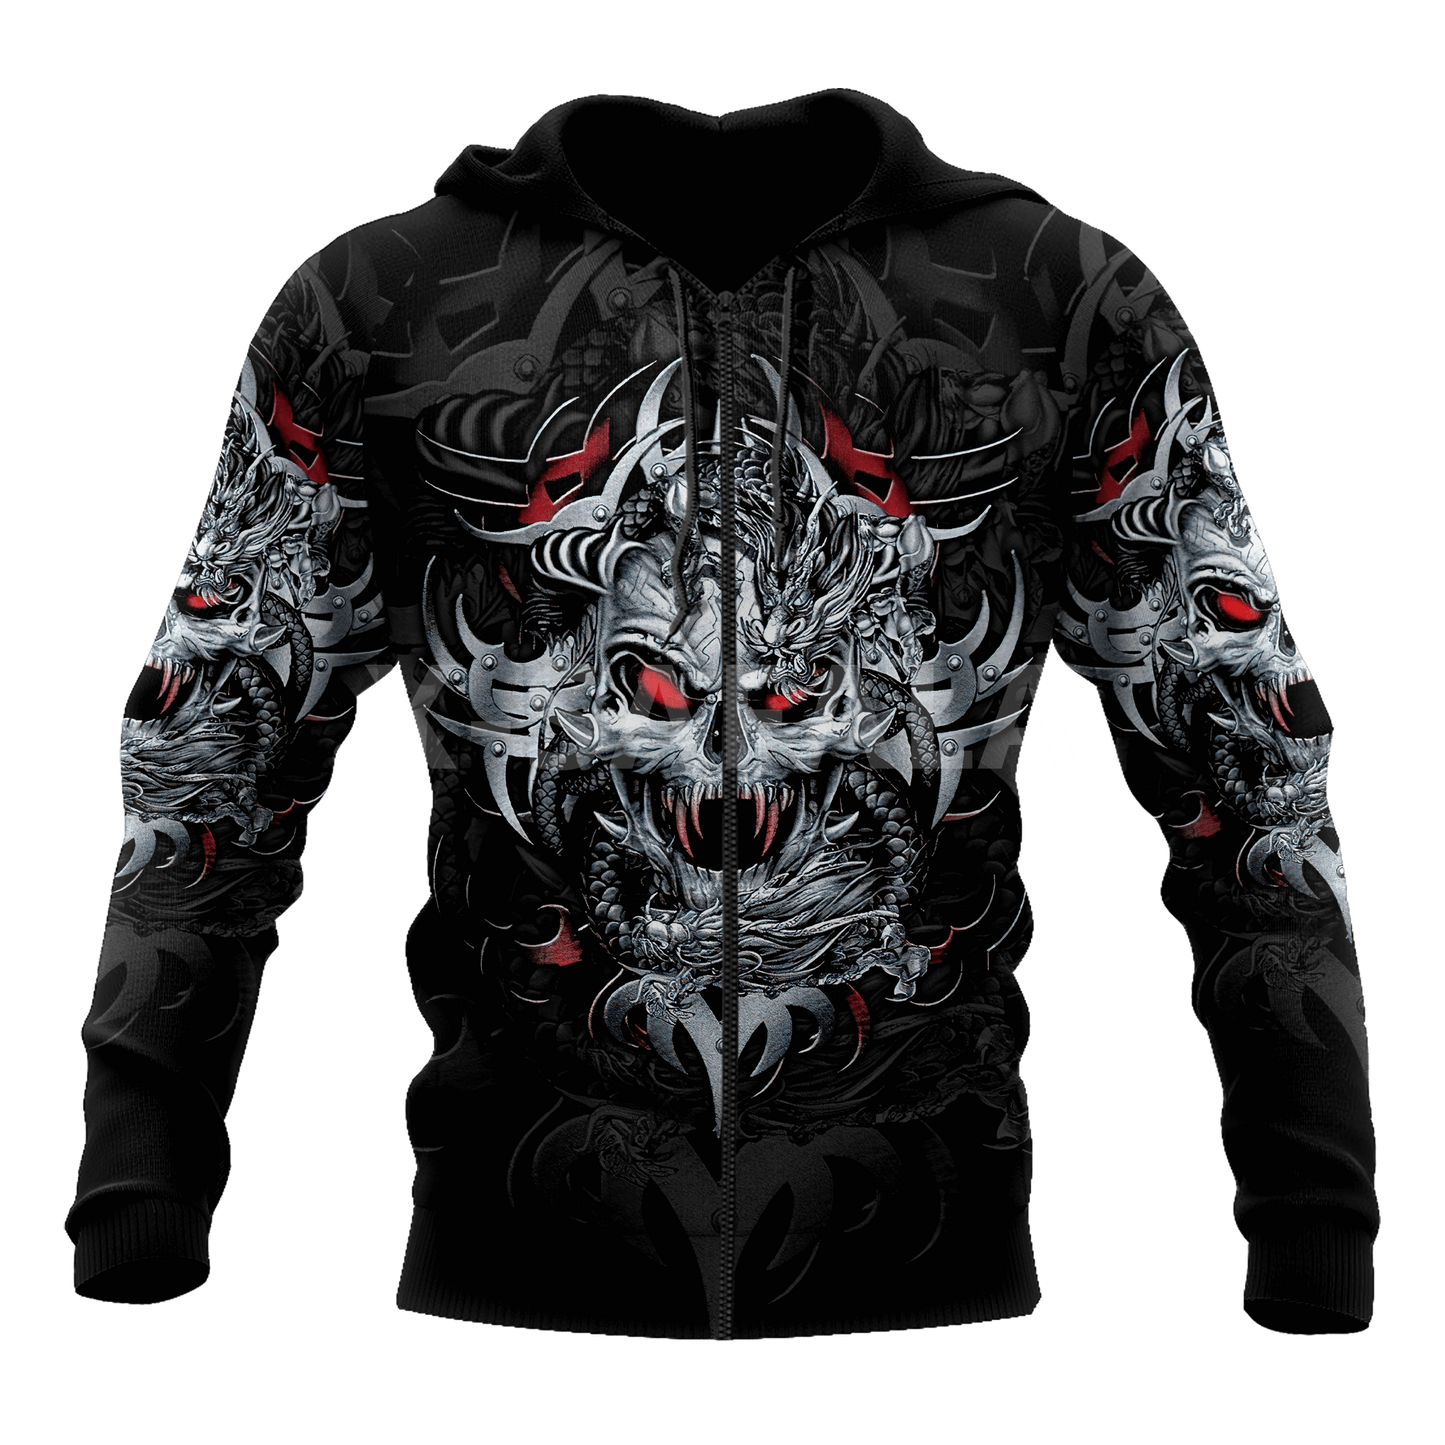 Satanic Skull Viking Trippy 3D Print Size XS-7XL Hoodie Man Women Harajuku Outwear Zipper Pullover Sweatshirt Casual Unisex